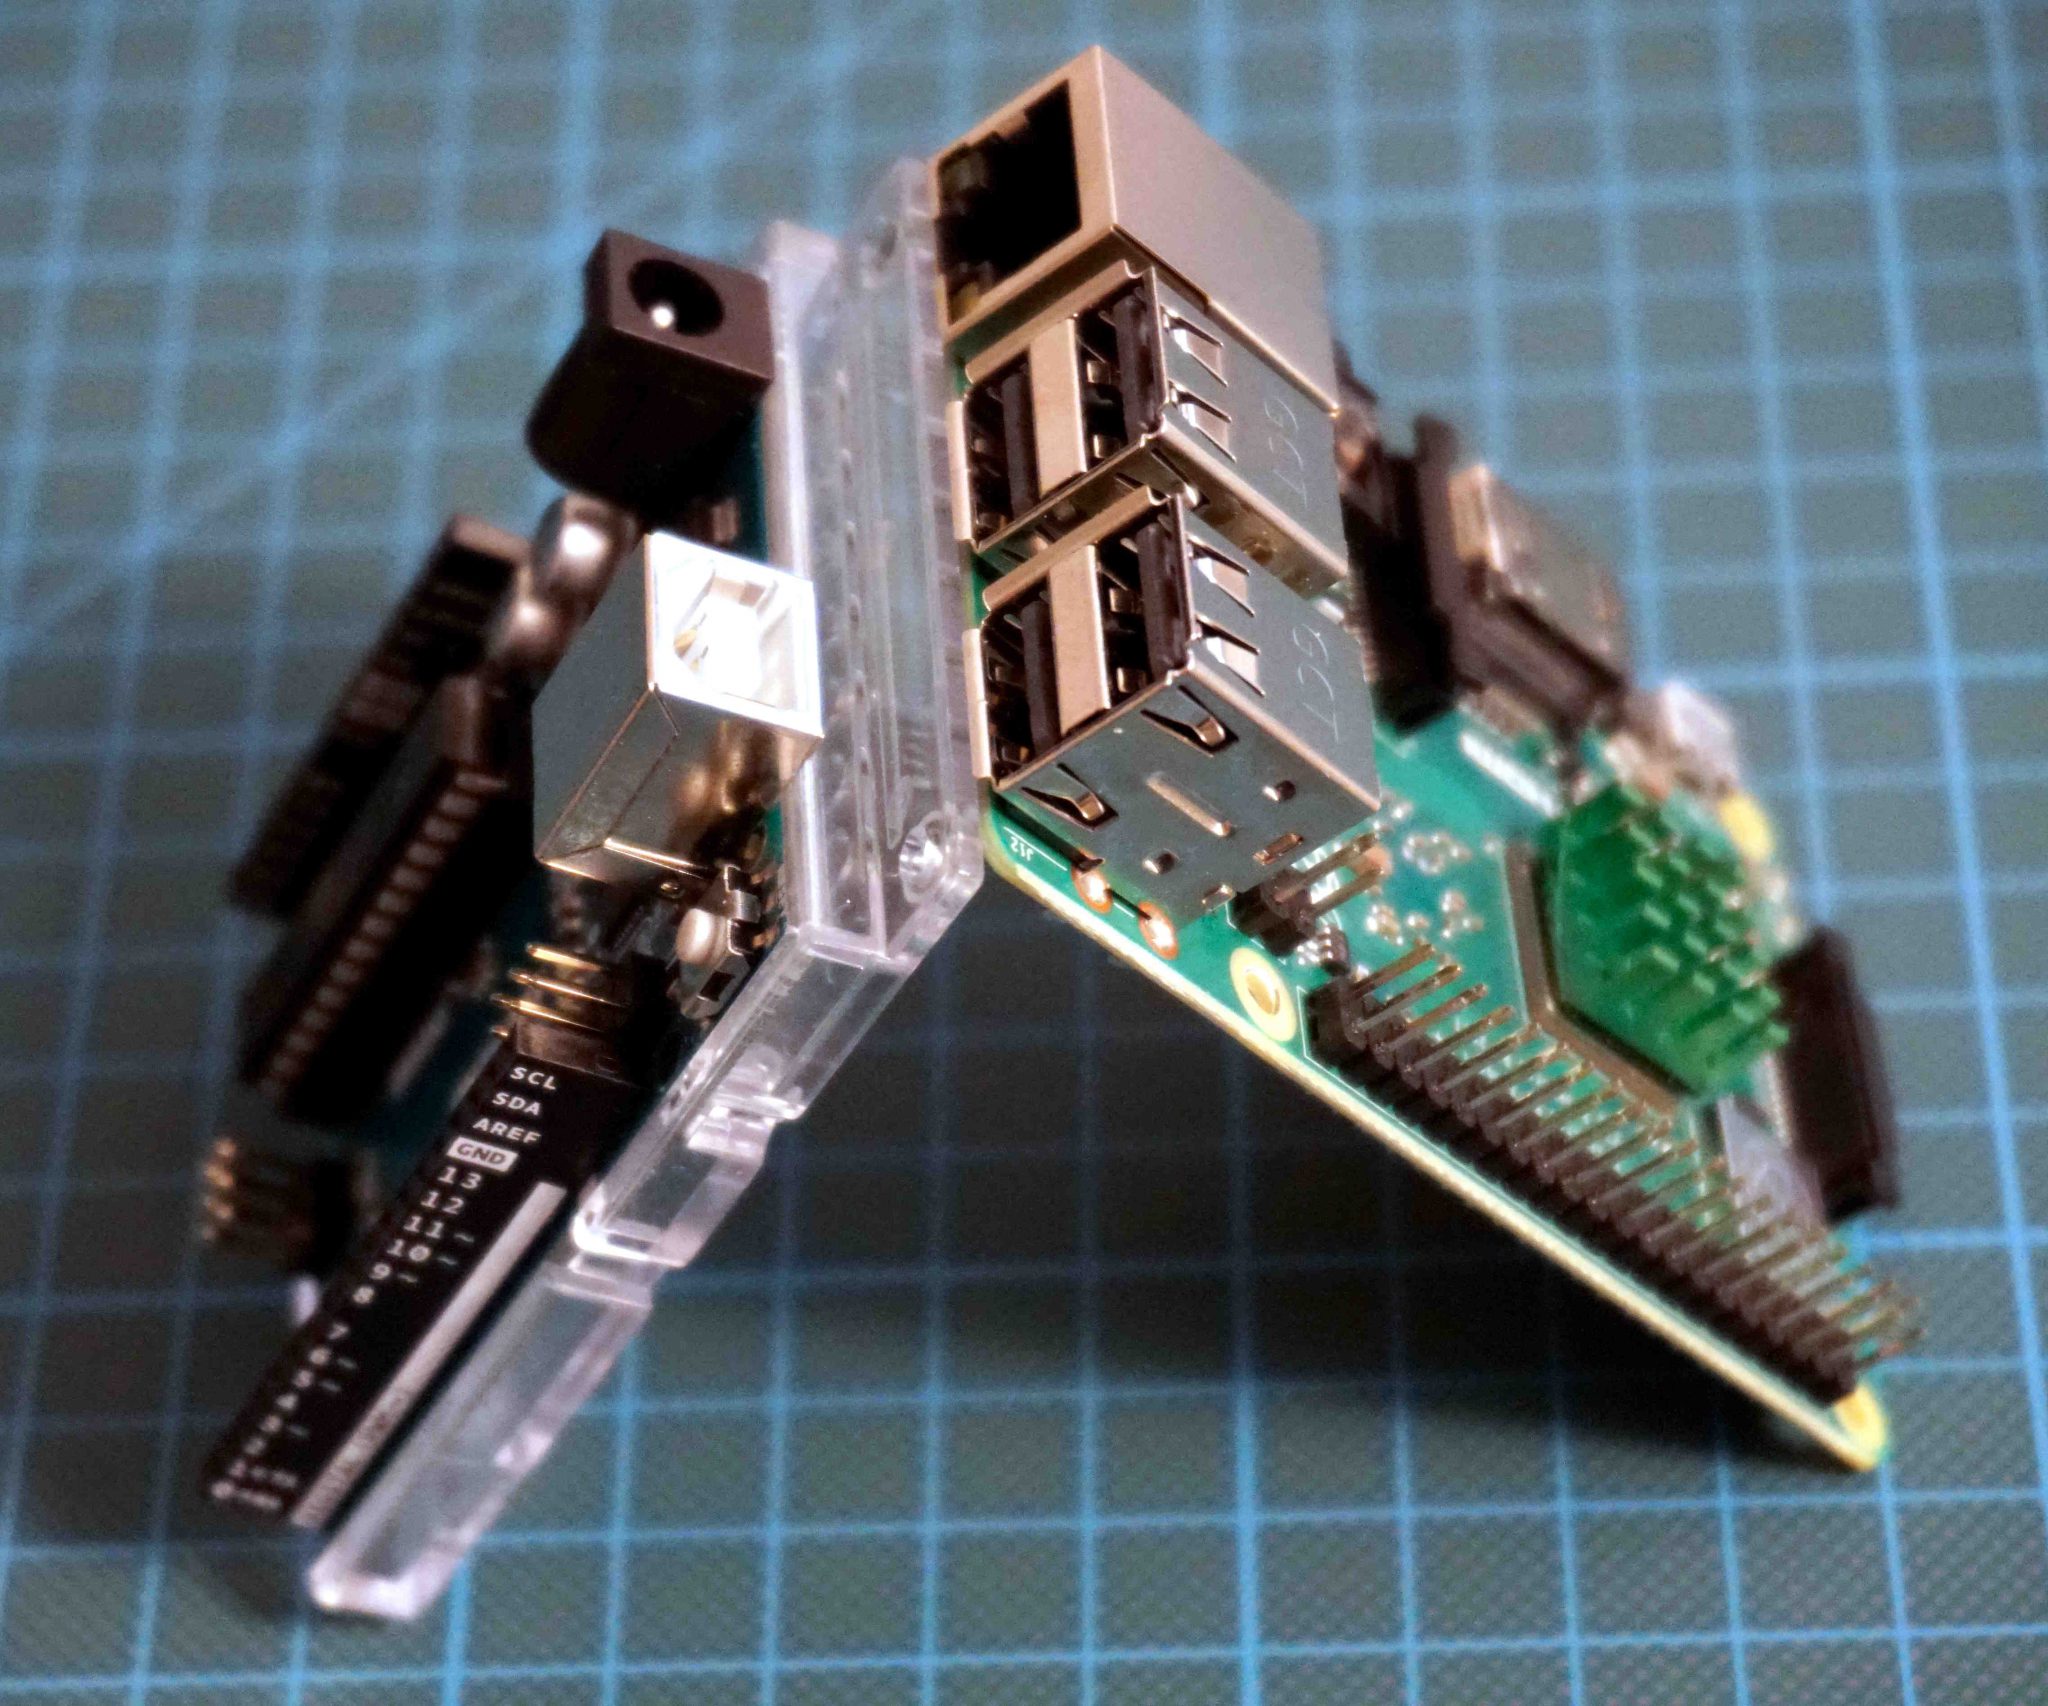 Raspberry Pi vs Arduino